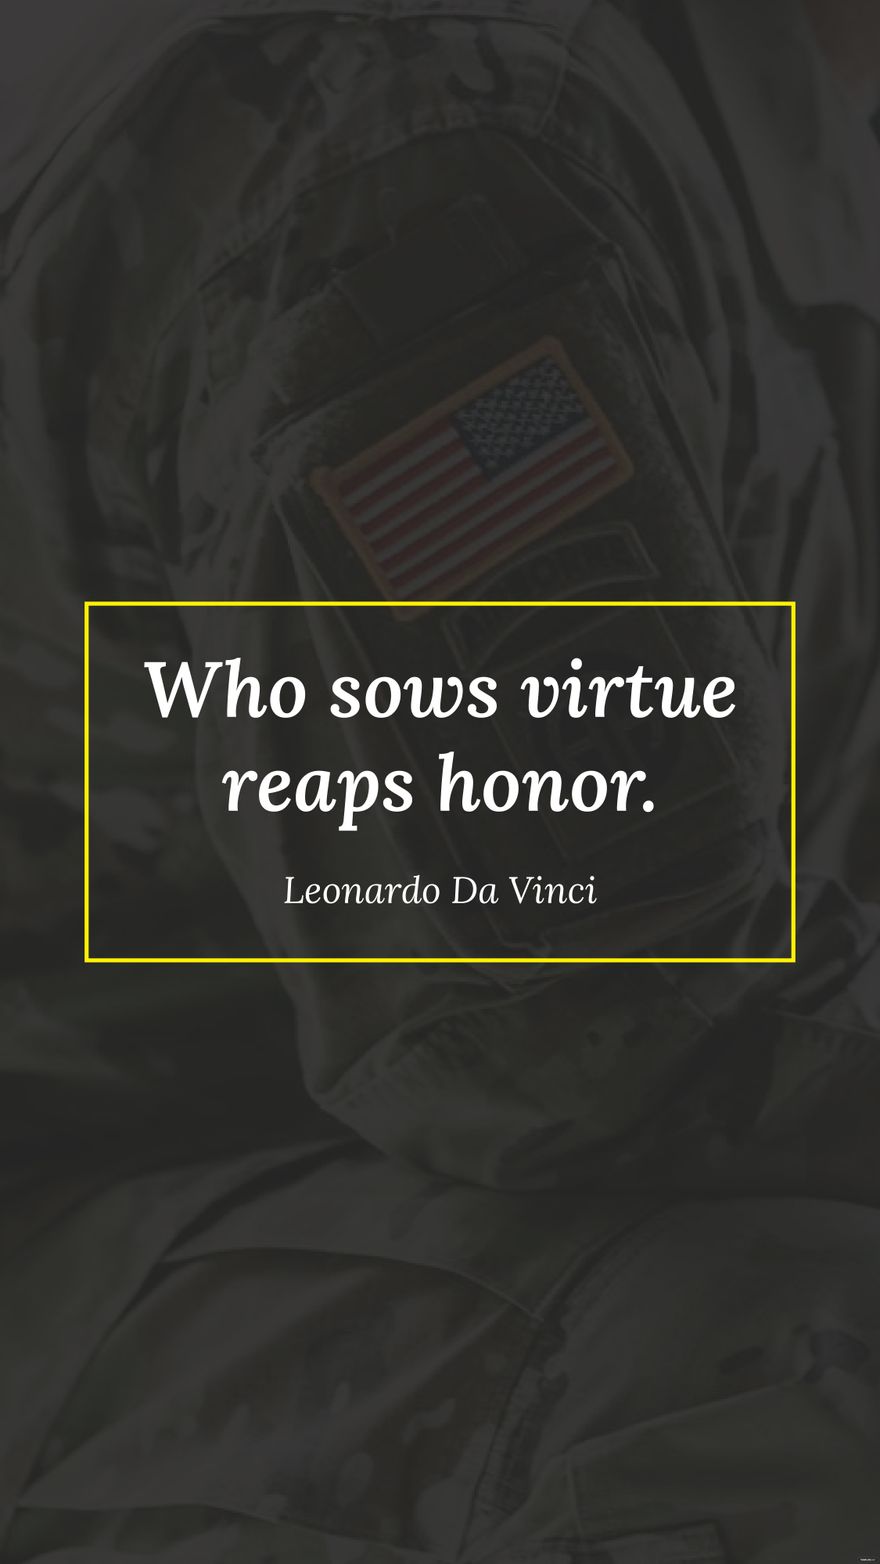 Leonardo da Vinci - Who sows virtue reaps honor.